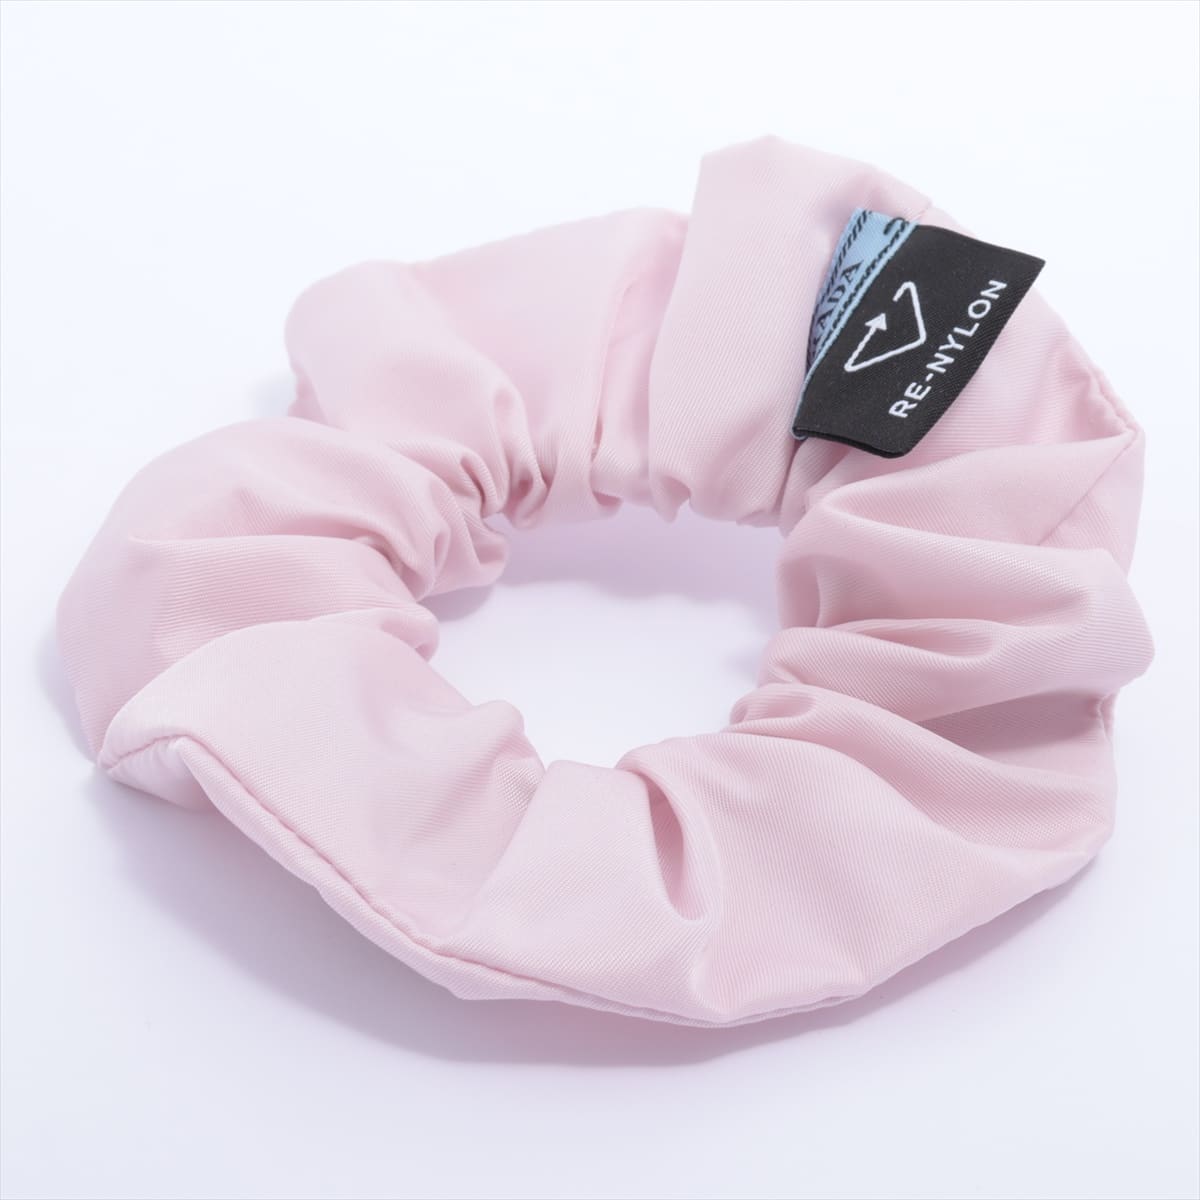 Prada 1IF015 Tessuto Scrunchie Nylon Pink